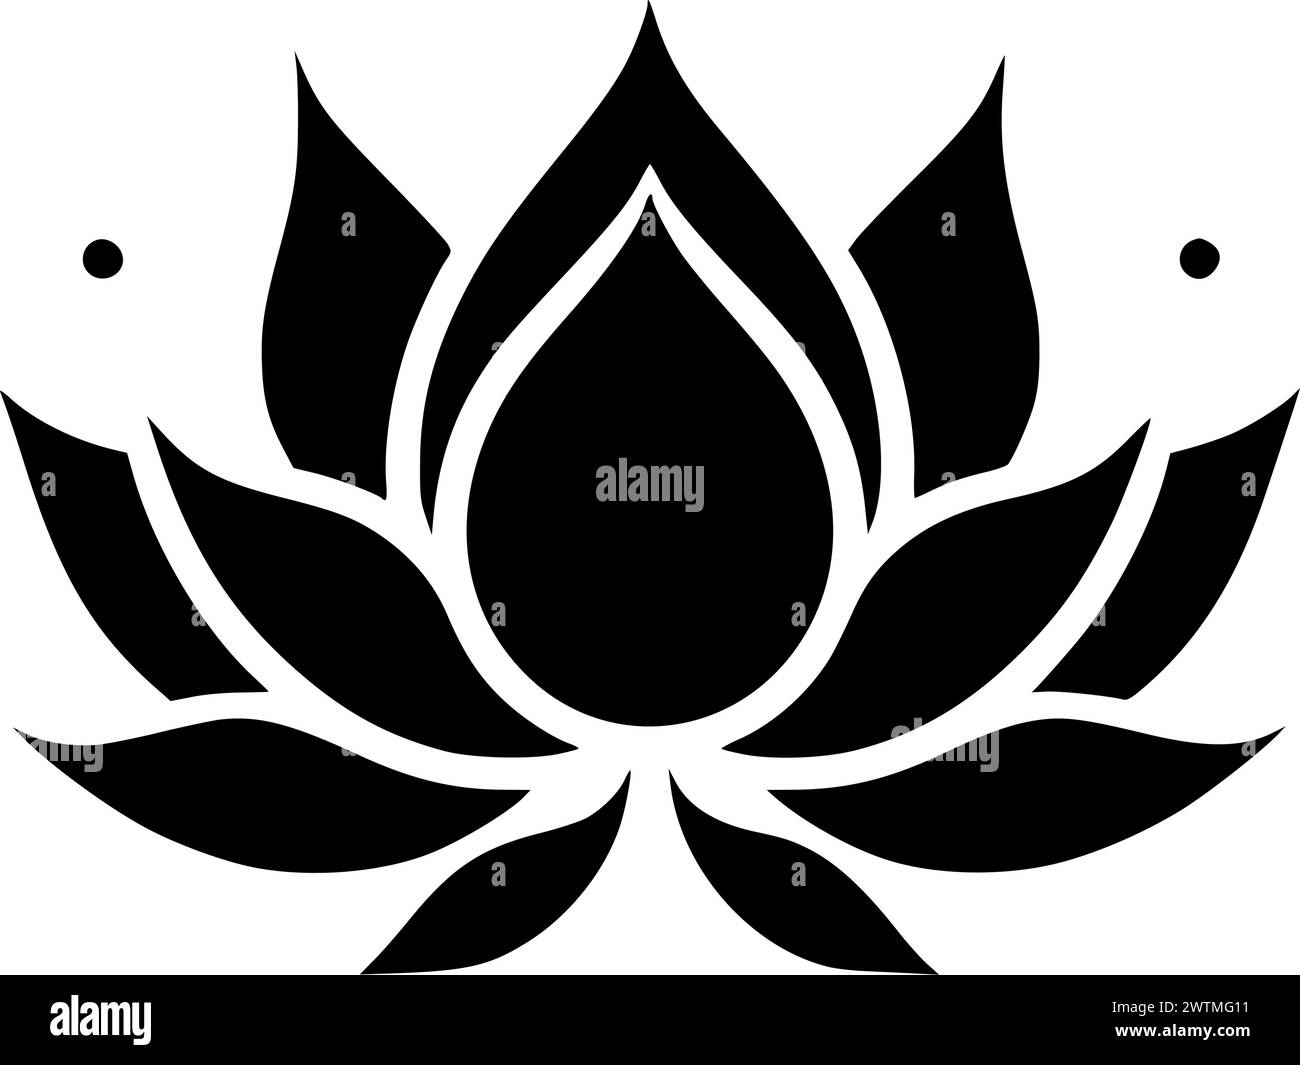 Lotus flower - minimalist and simple silhouette - vector illustration Stock Vector